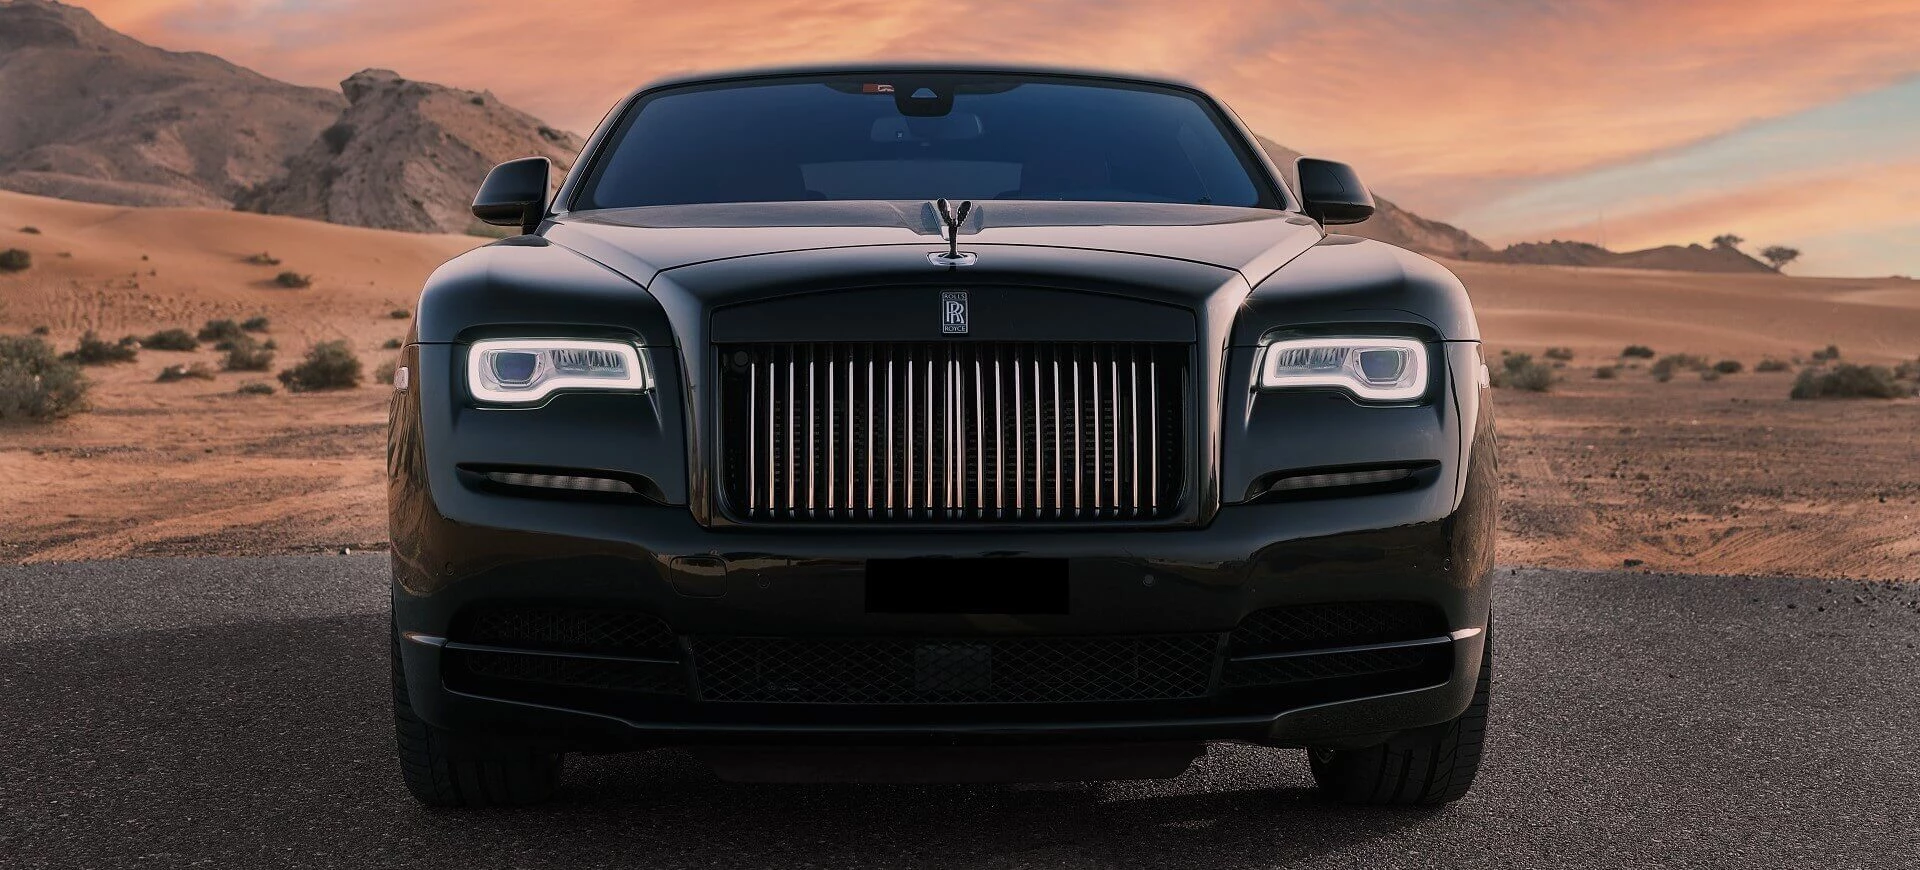 Аренда Rolls Royce Wraith в Дубае